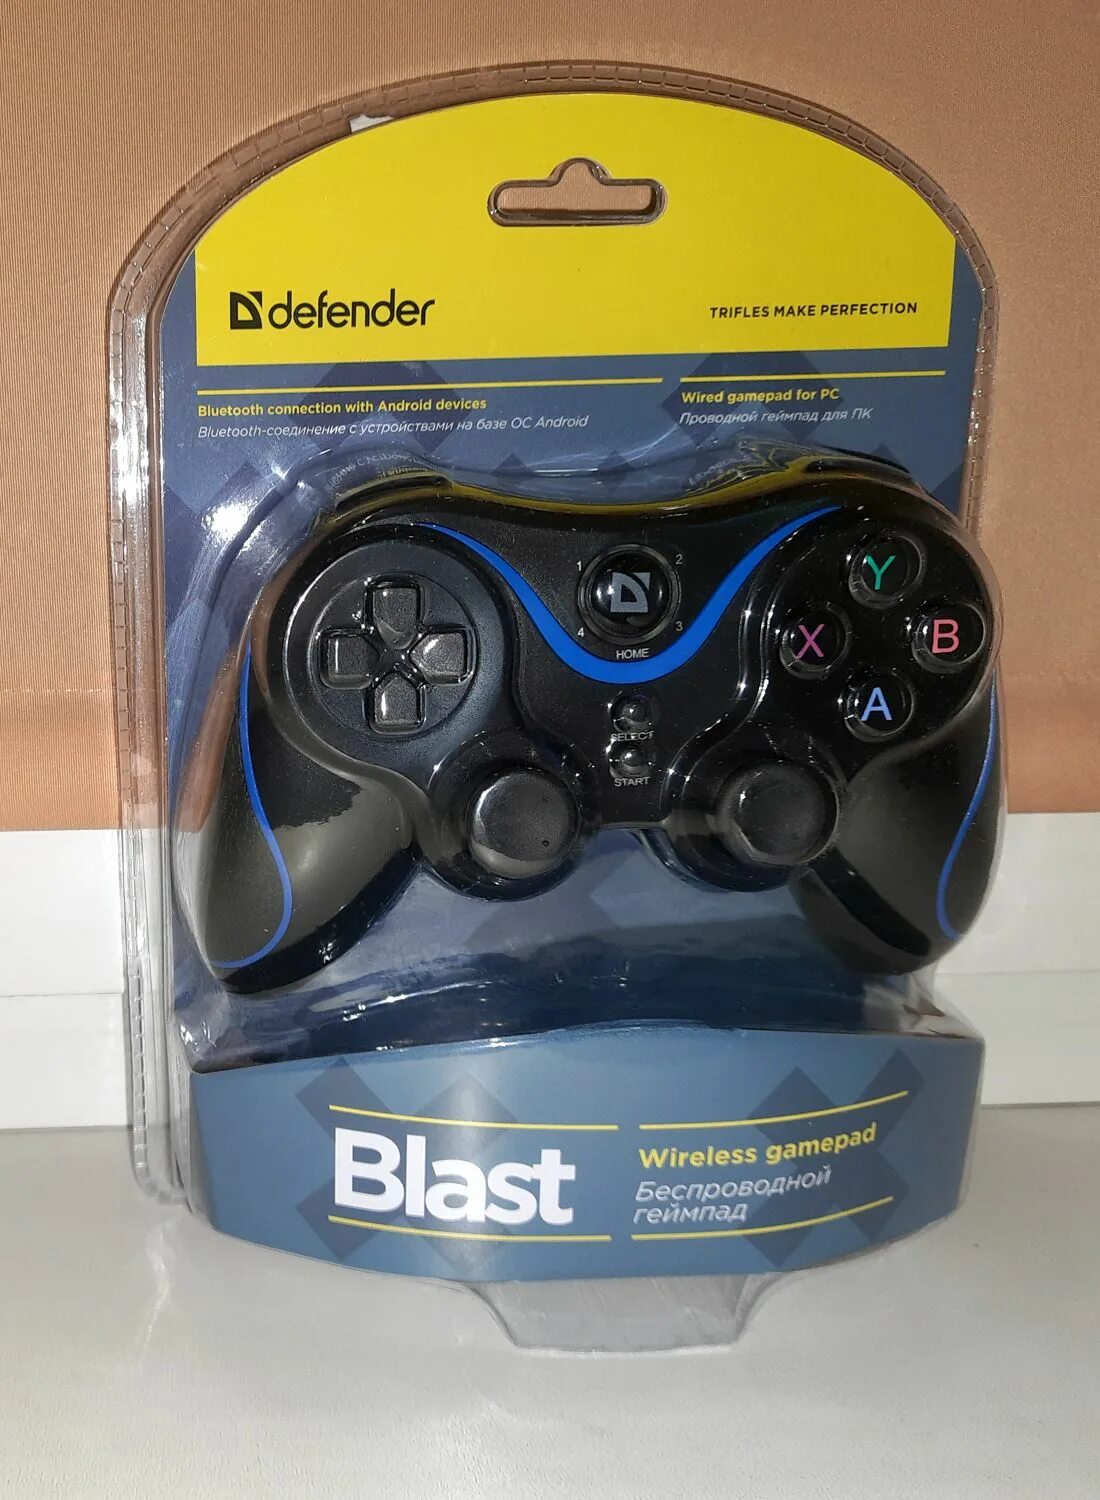 Геймпад Defender 64285. Беспроводной геймпад Defender Blast. Defender Blast (64285) Wireless Gamepad. Defender Blast USB, Bluetooth, Android, li-ion [64285] {геймпад беспроводной}. Defender blast к пк